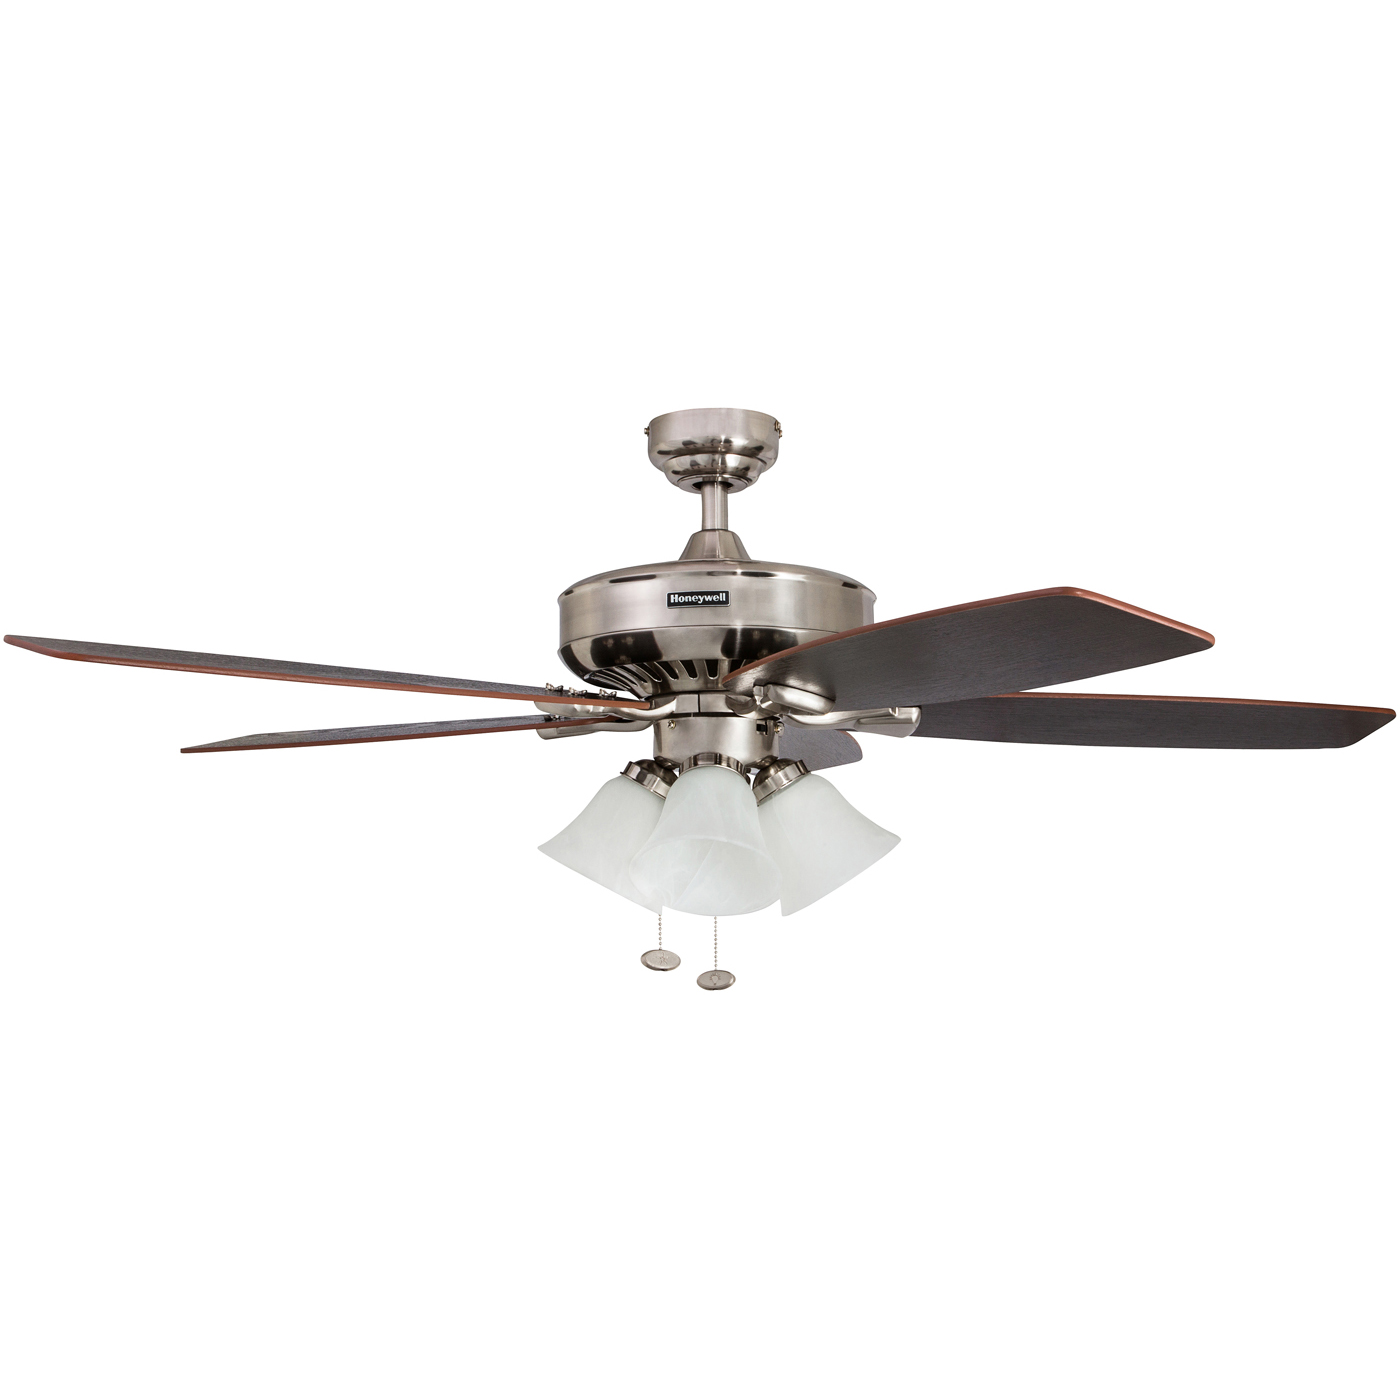 52" Honeywell Hamilton Ceiling Fan, Brushed Nickel - image 3 of 4